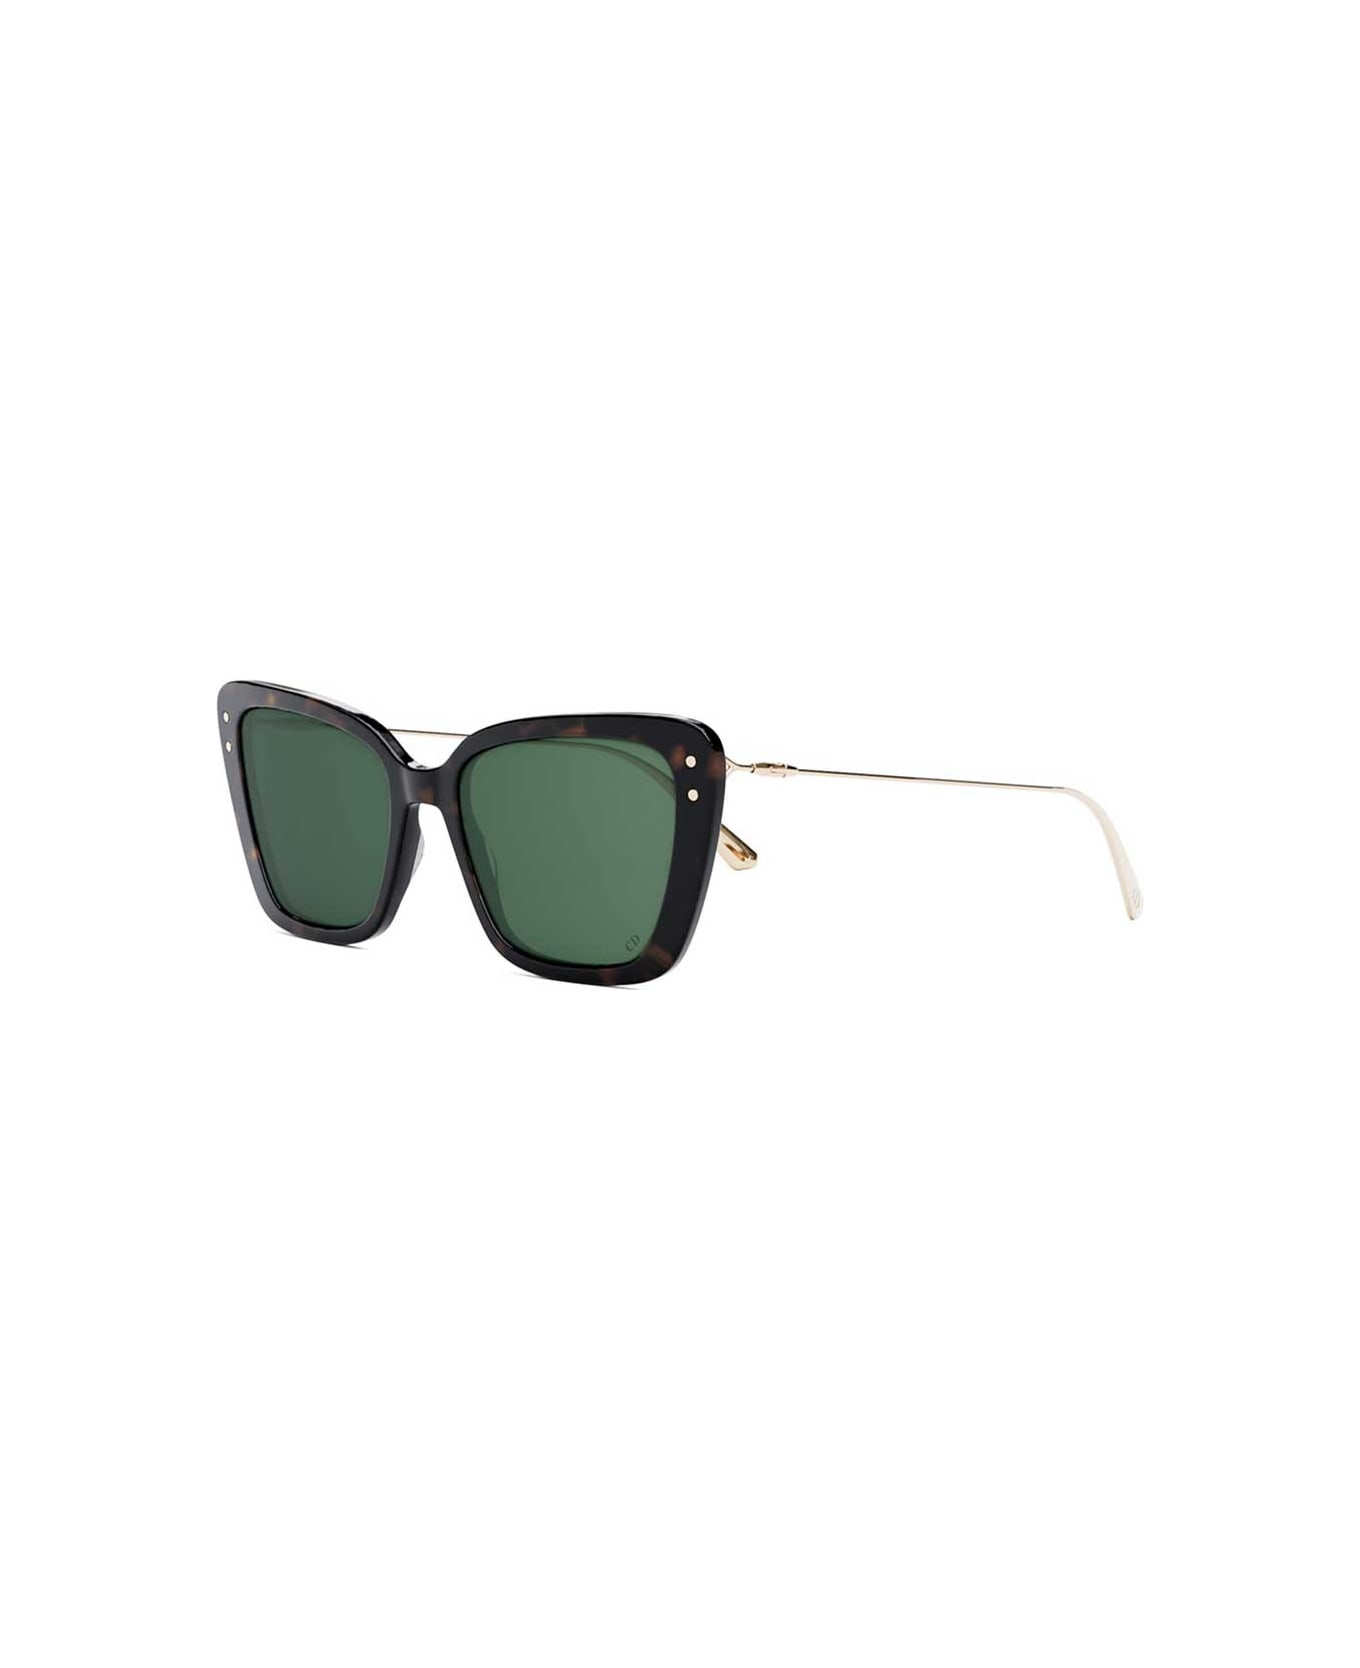 Dior Eyewear Sunglasses - Marrone/Verde